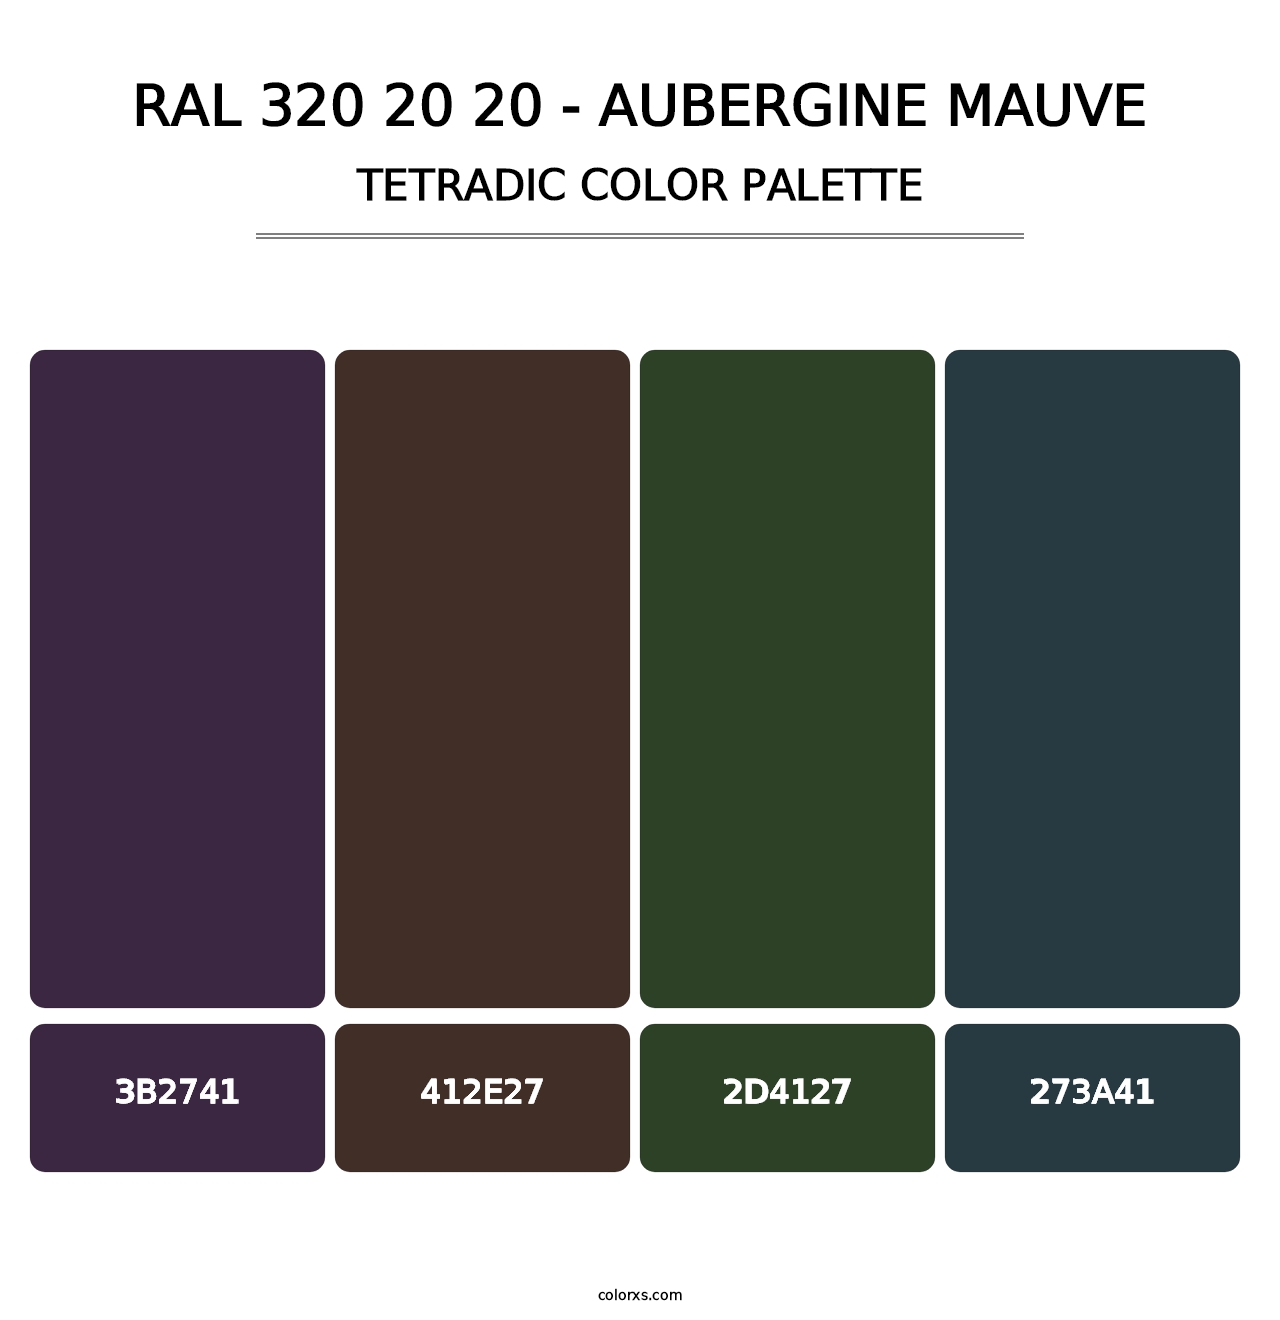 RAL 320 20 20 - Aubergine Mauve - Tetradic Color Palette